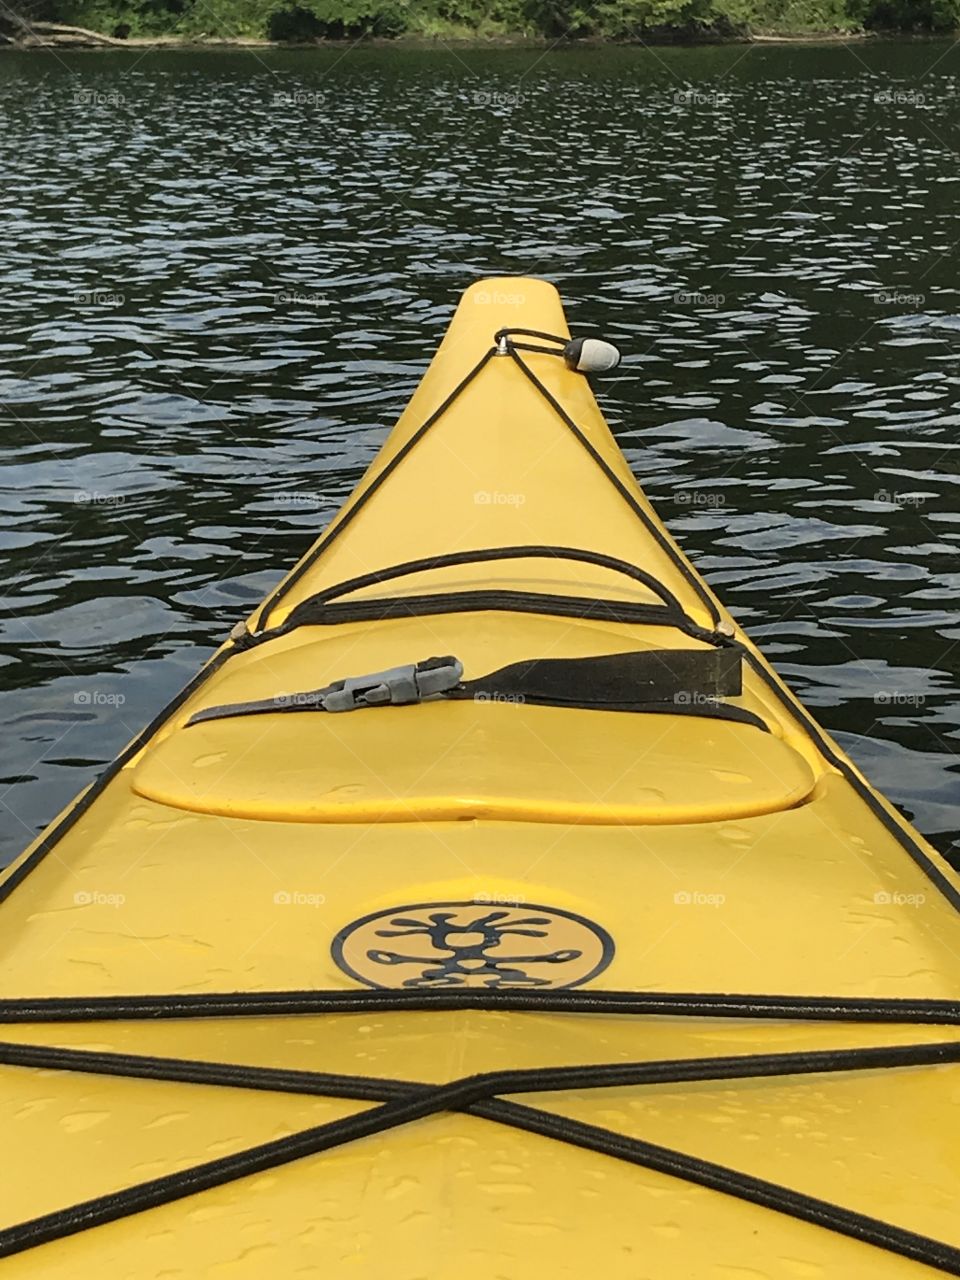 Just me and my kayak